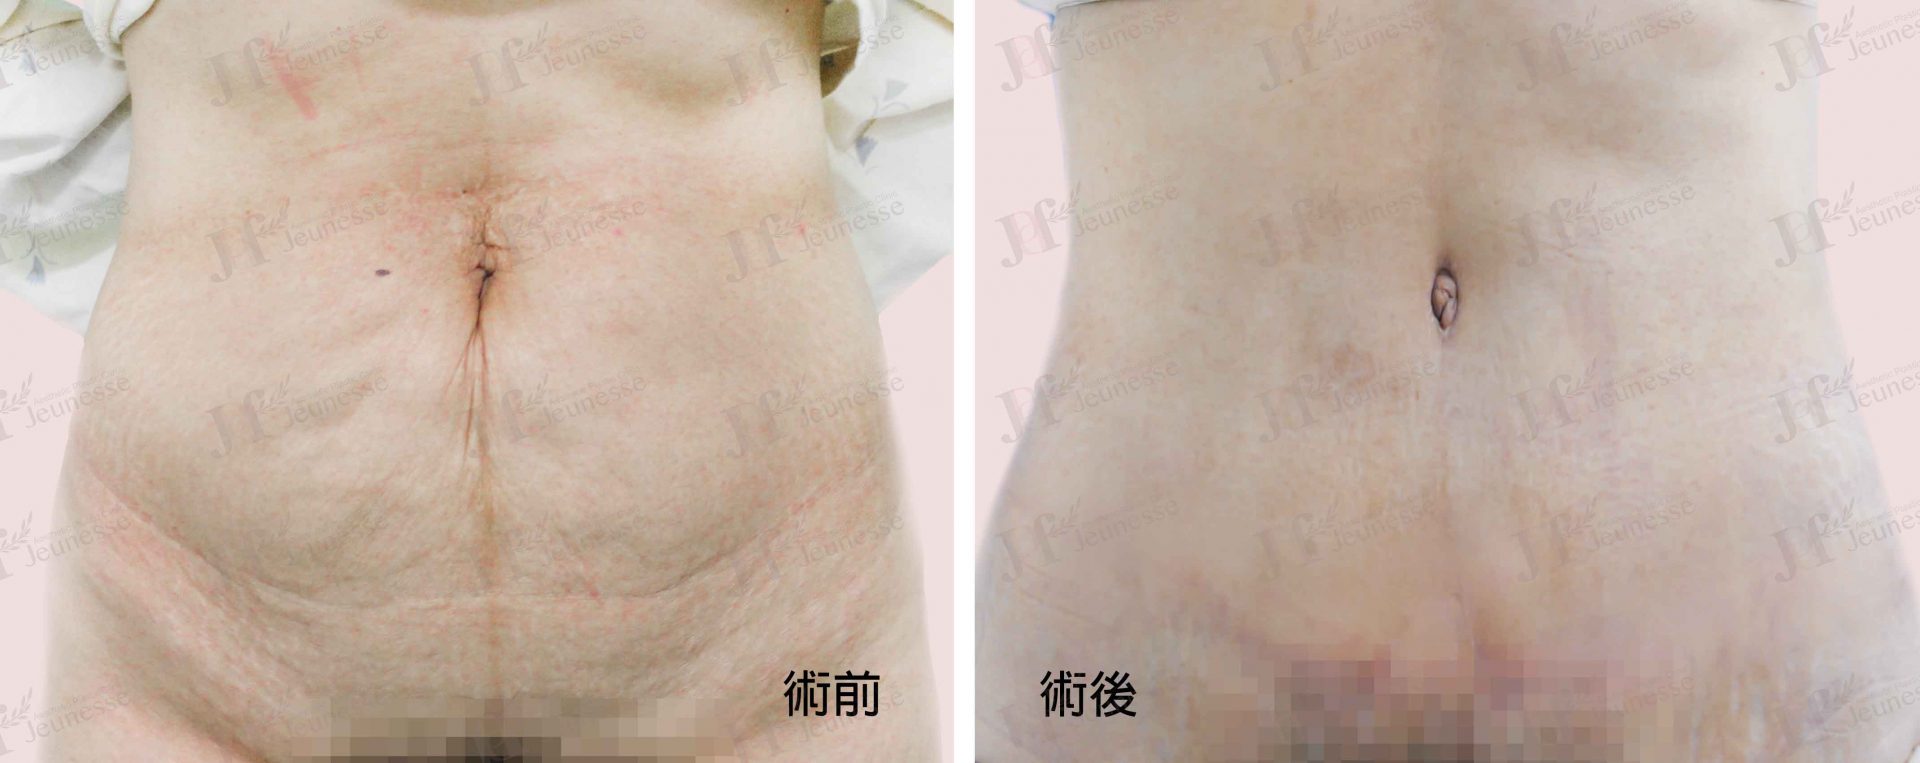 Abdominoplasty腹部成形術及抽脂手術 case 1 正面-浮水印